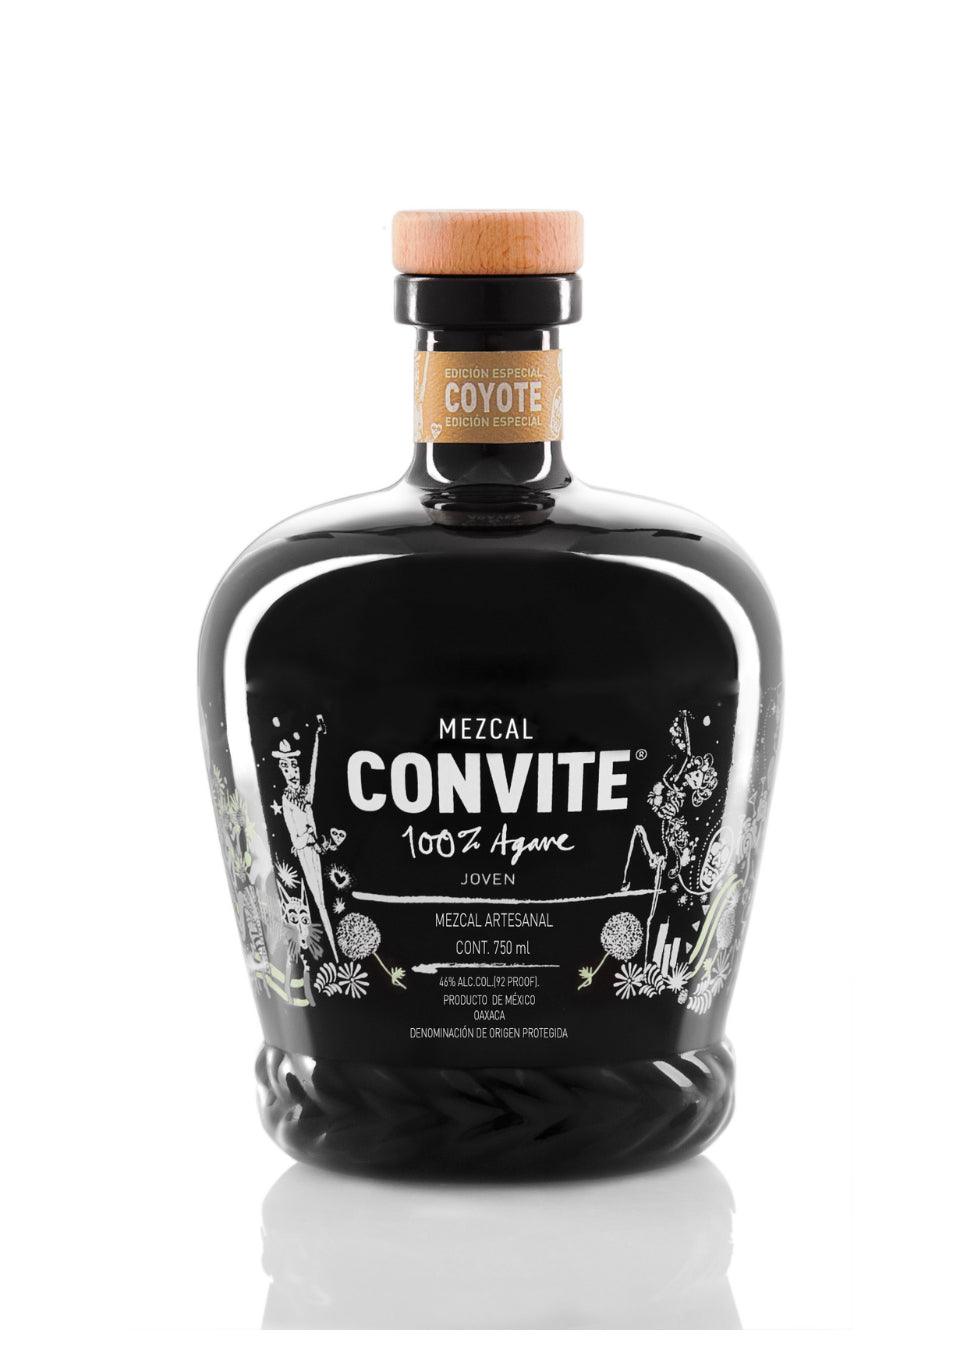 Convite Artesanal Joven Coyote Edicion Mezcal - Liquor Luxe